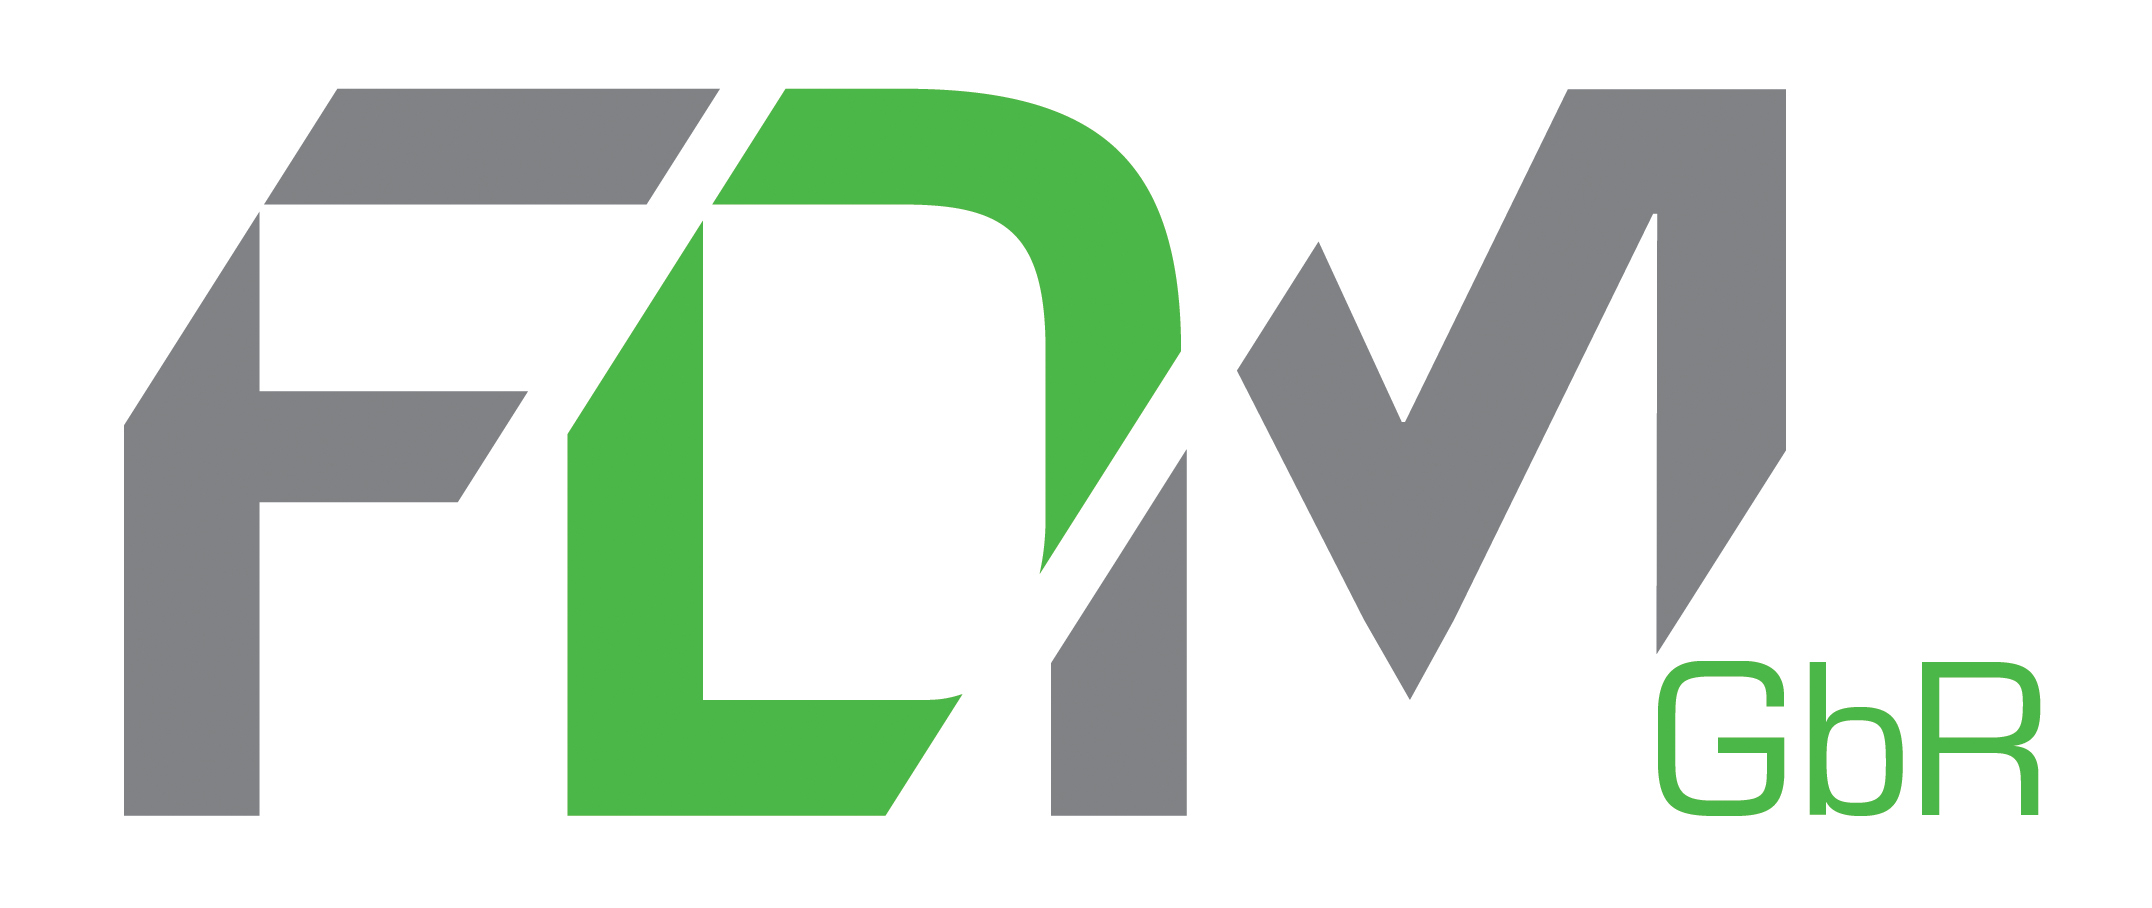 Logo FDM